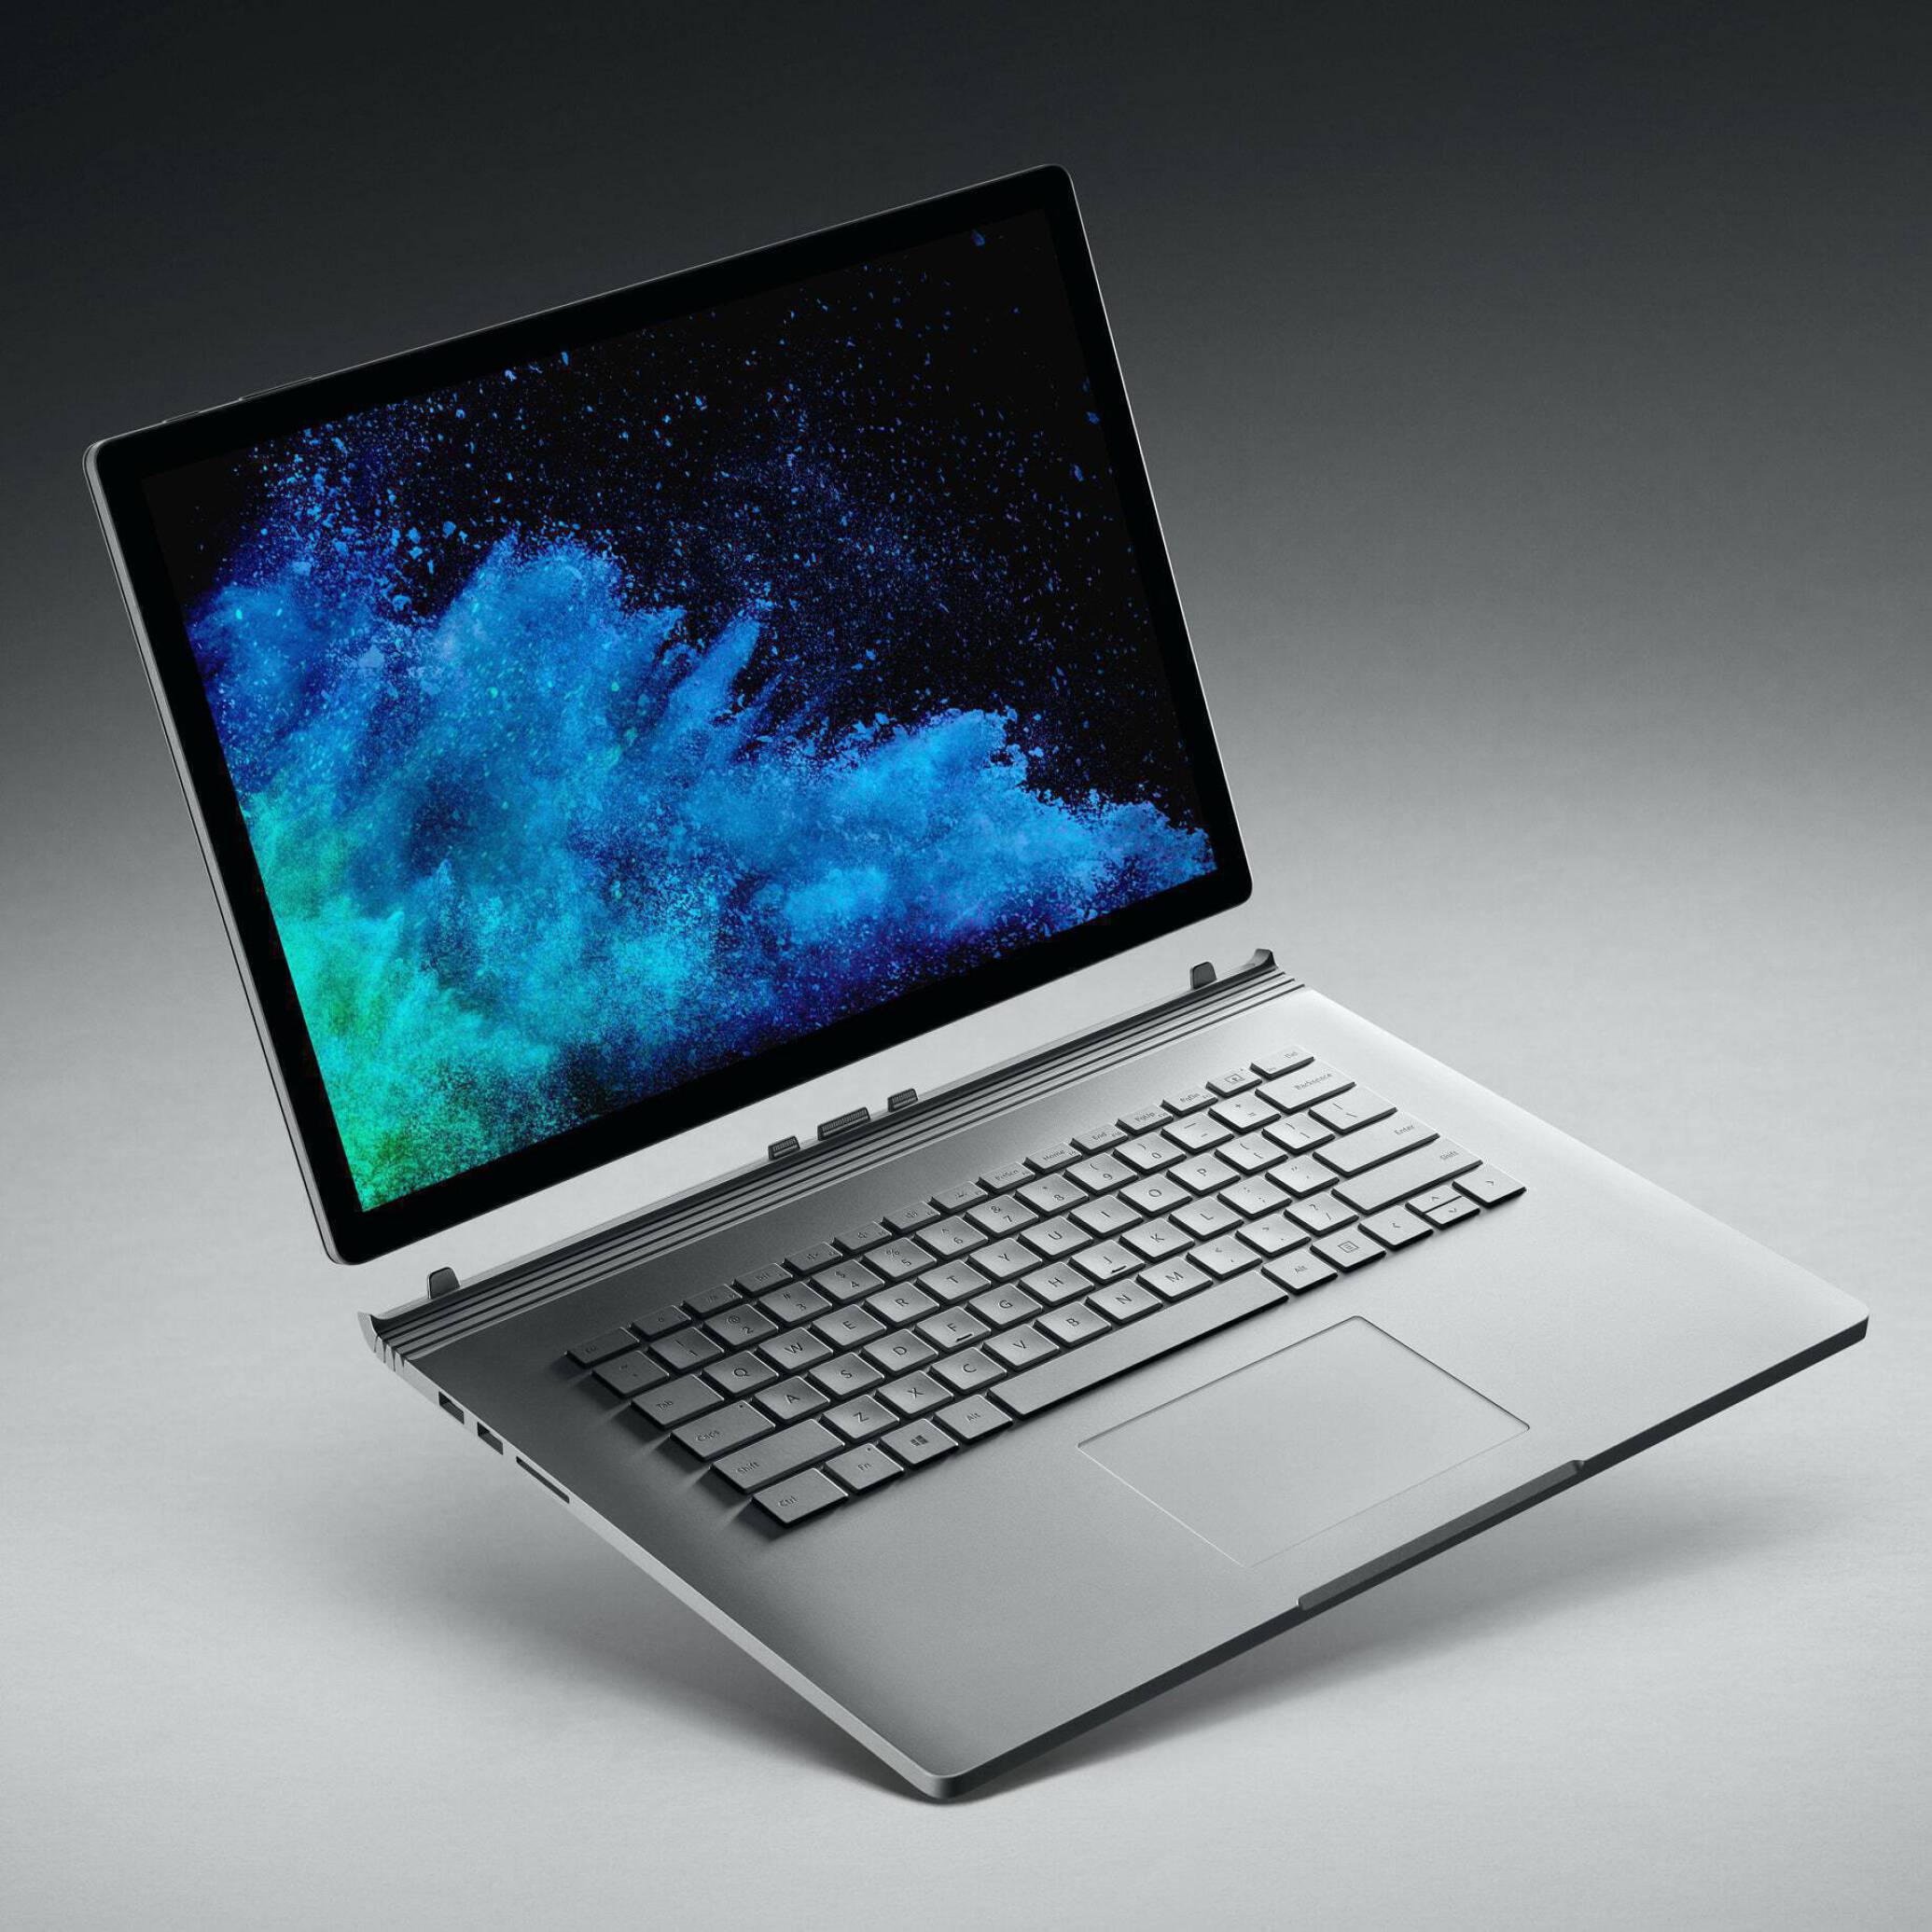  Microsoft surface Book 2 خرید مشخصات و قیمت لپ تاپ استوک سرفیس با گرافیک مجزا| لپ تاپ استوک اروپایی مایکروسافت سرفیس بوک 